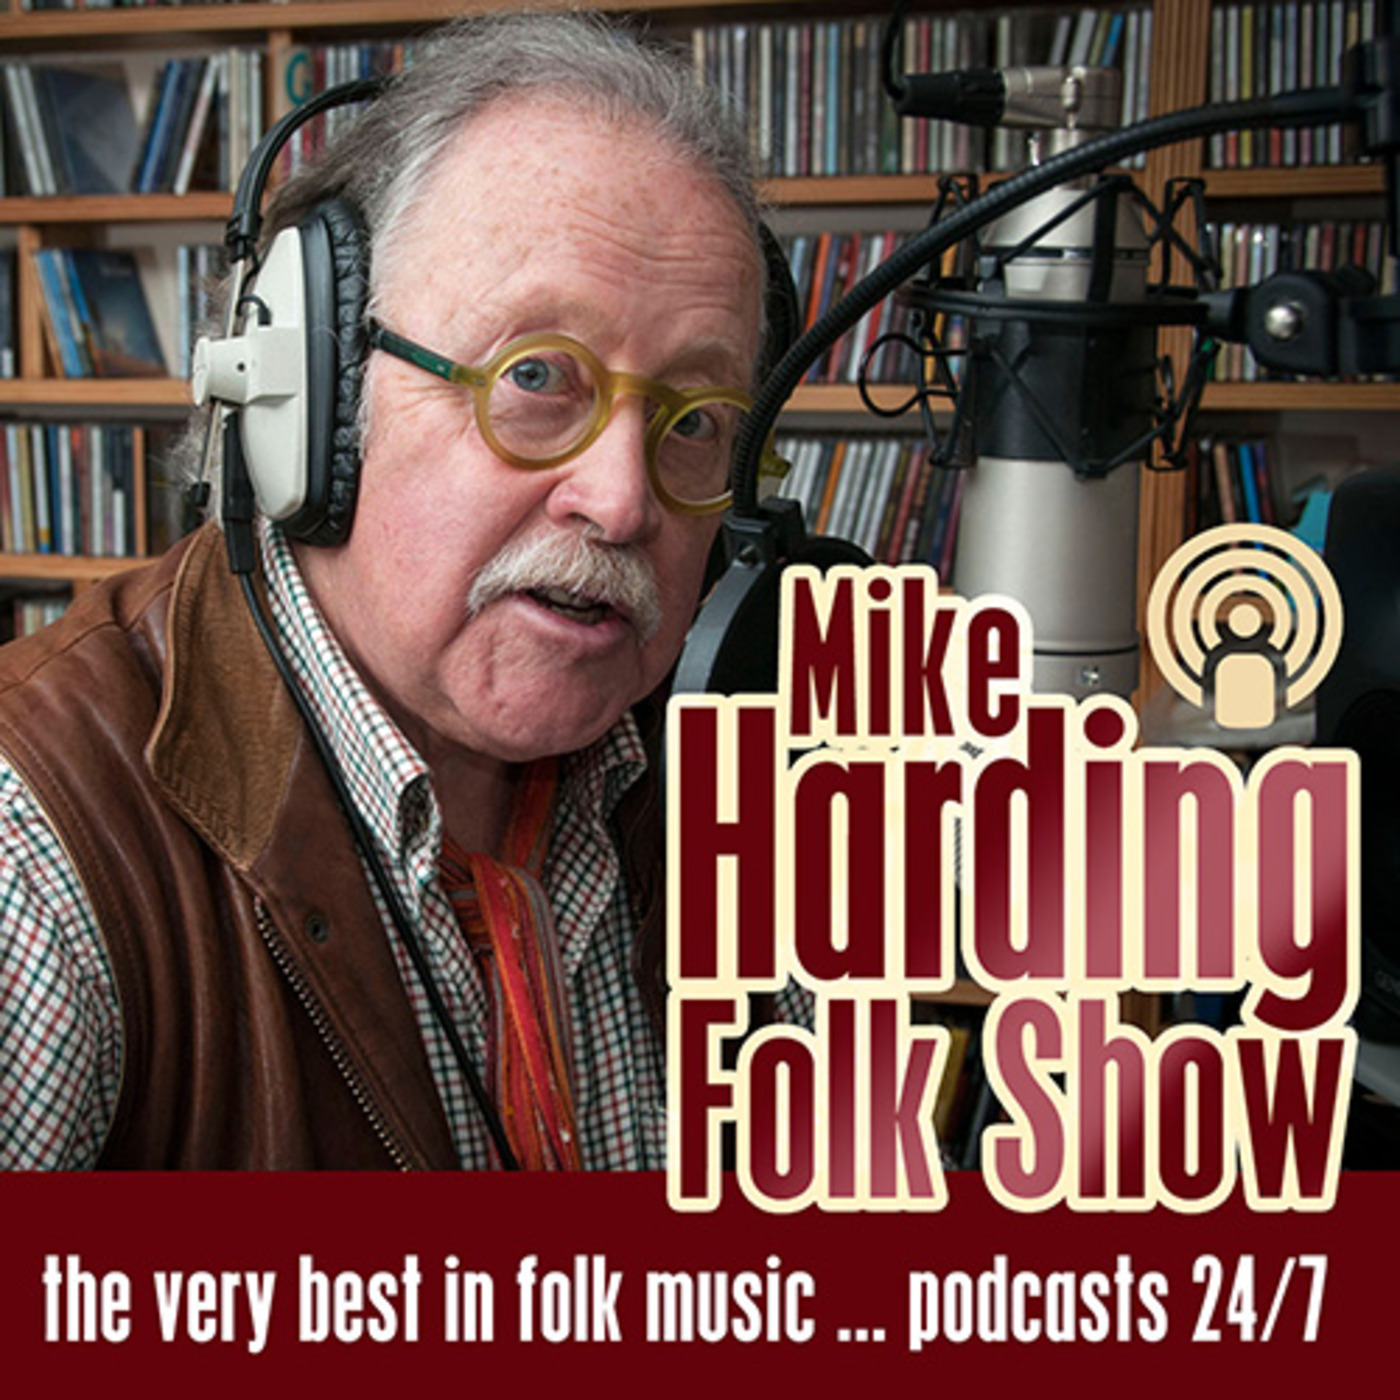 Mike Harding Folk Show 294